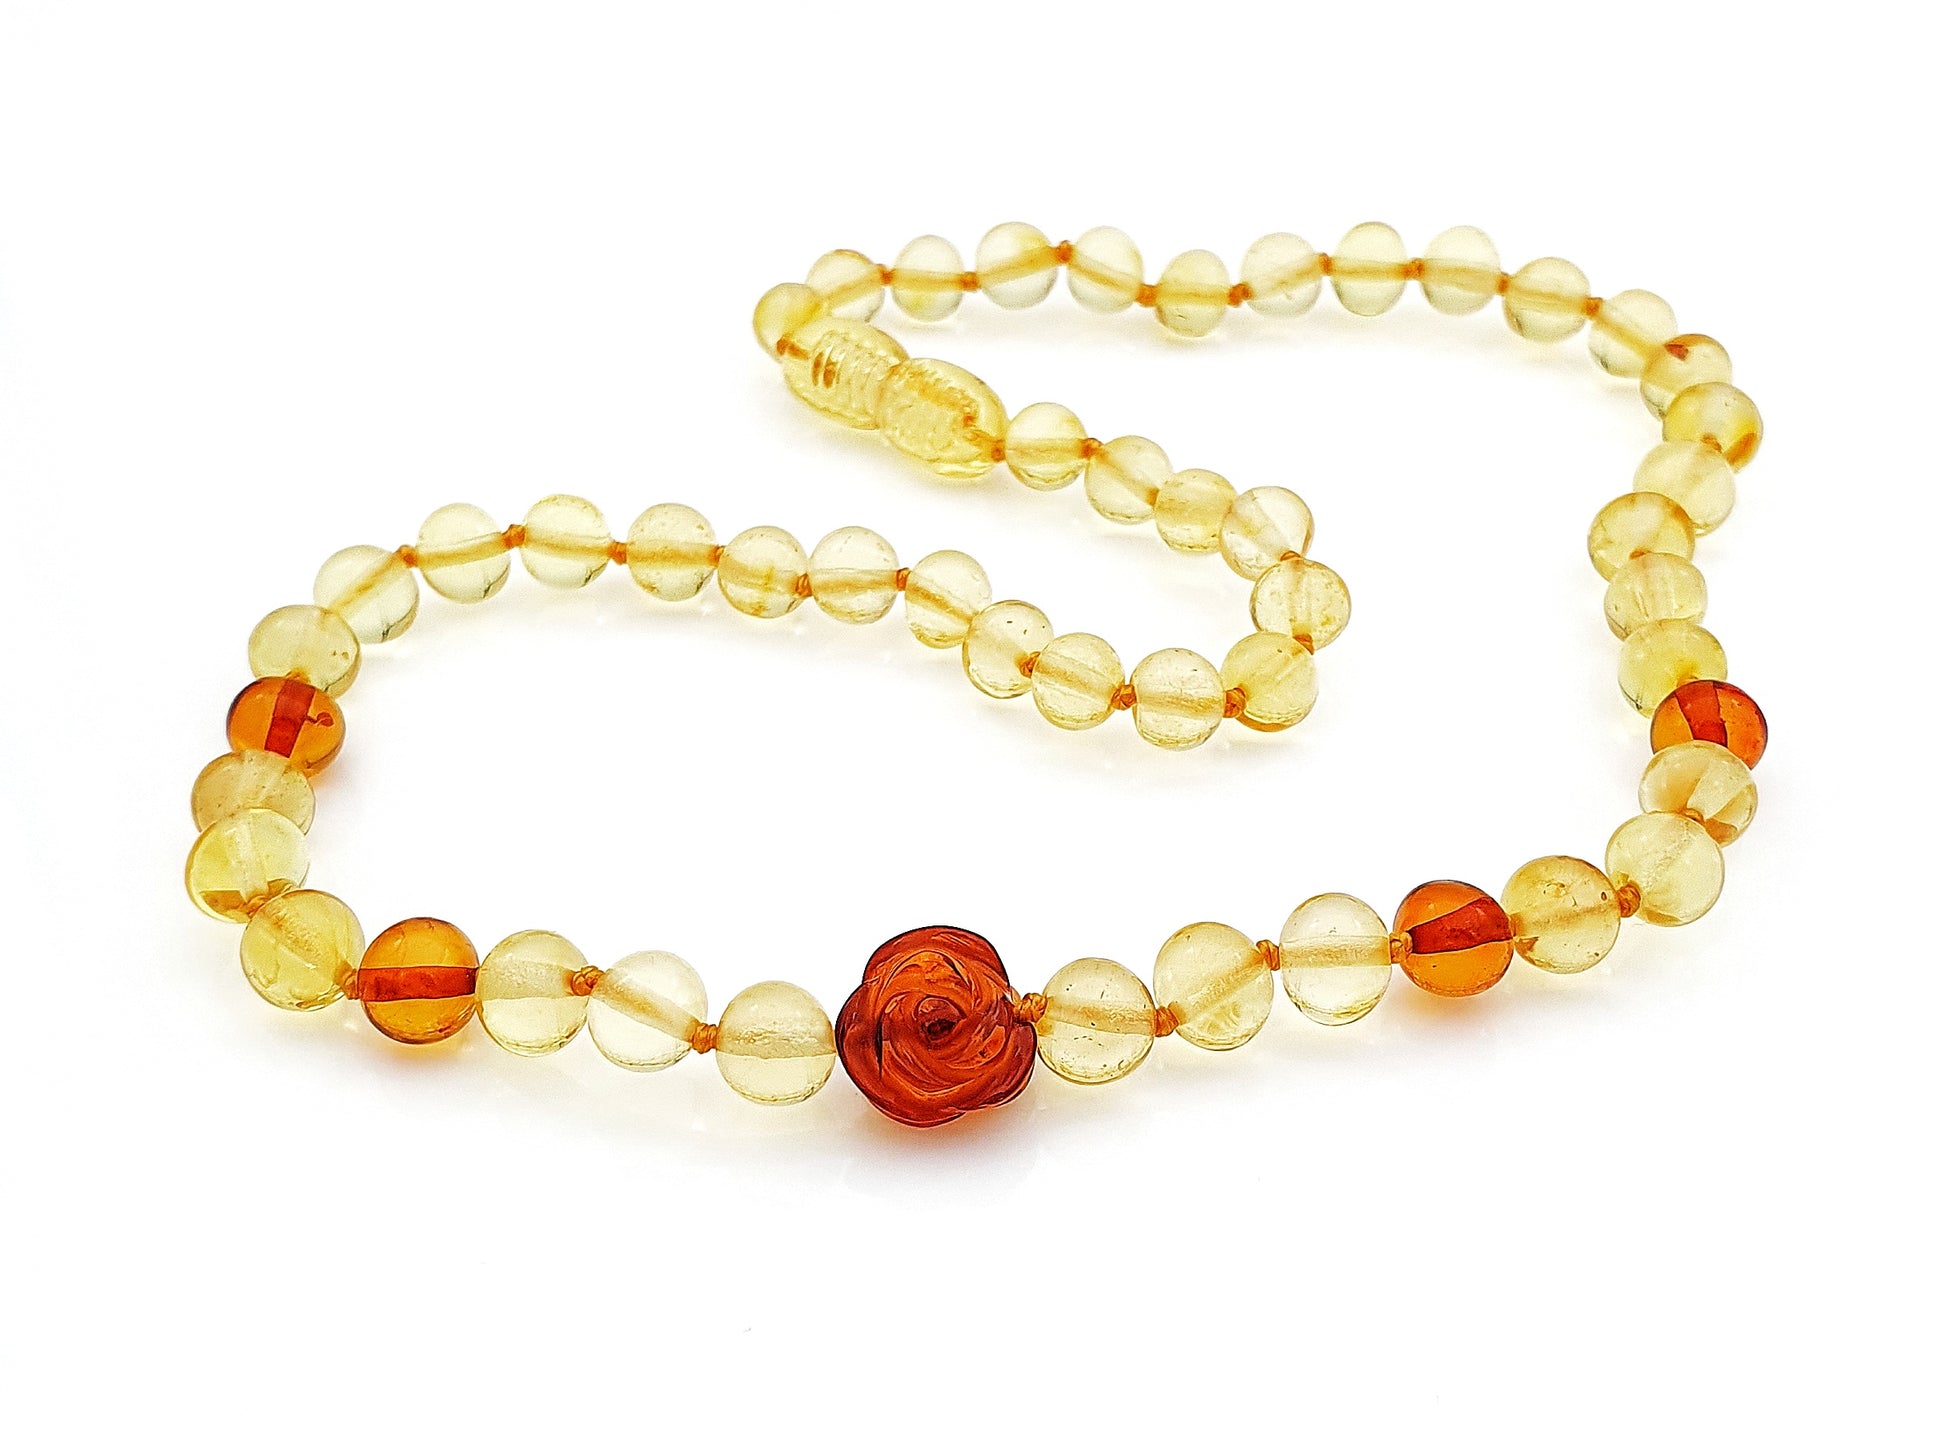 Natural lemon Baltic amber teething necklace